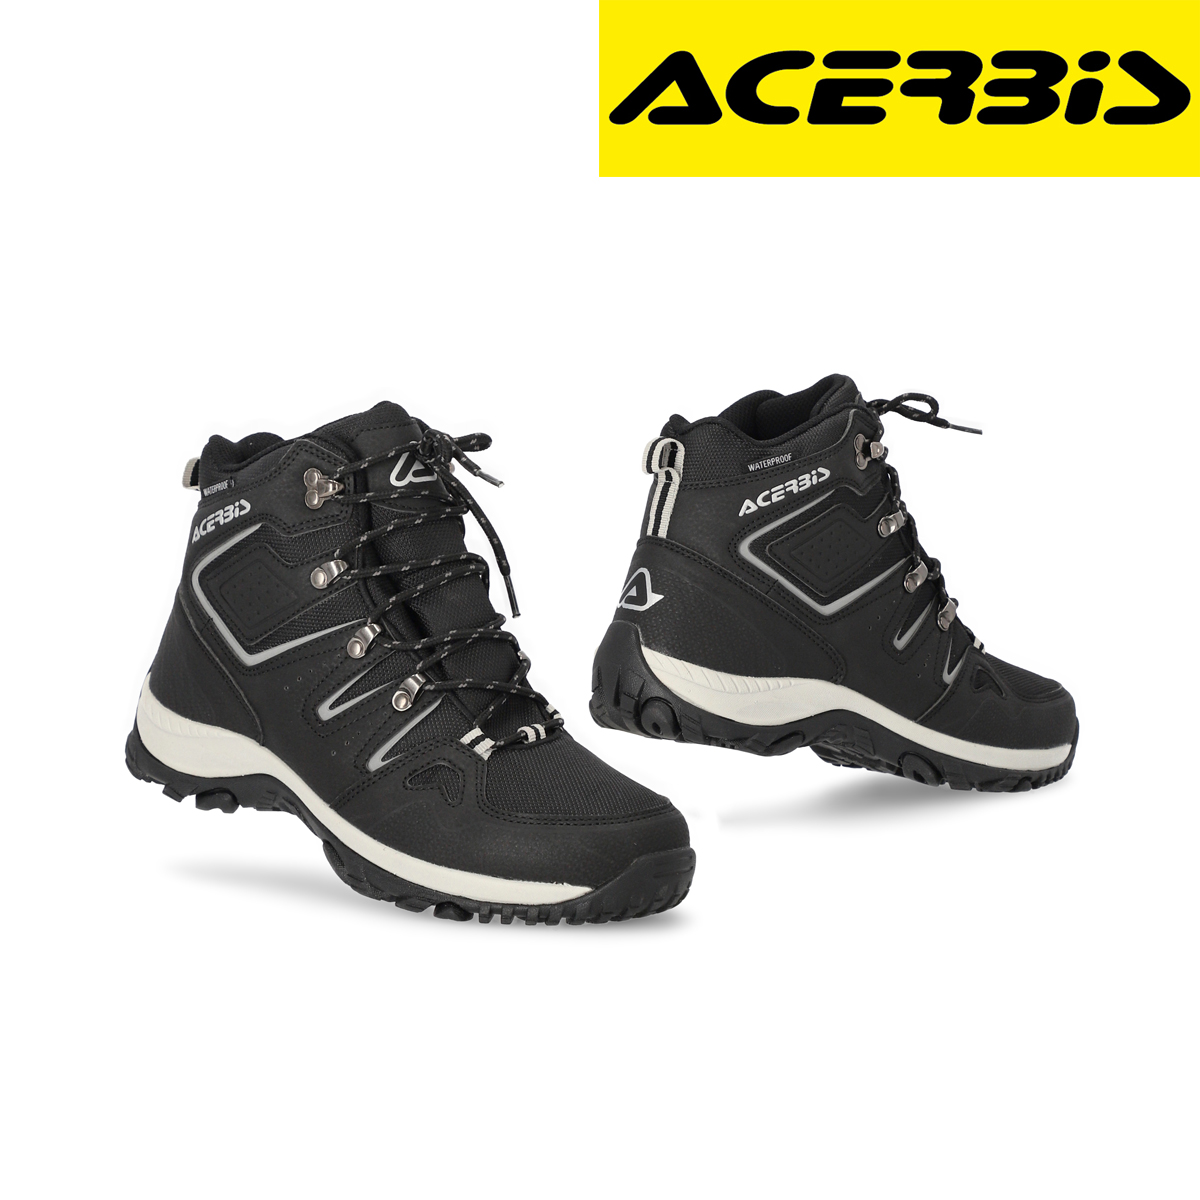 Cipele za motor Acerbis X-Mud WP CE - Crne